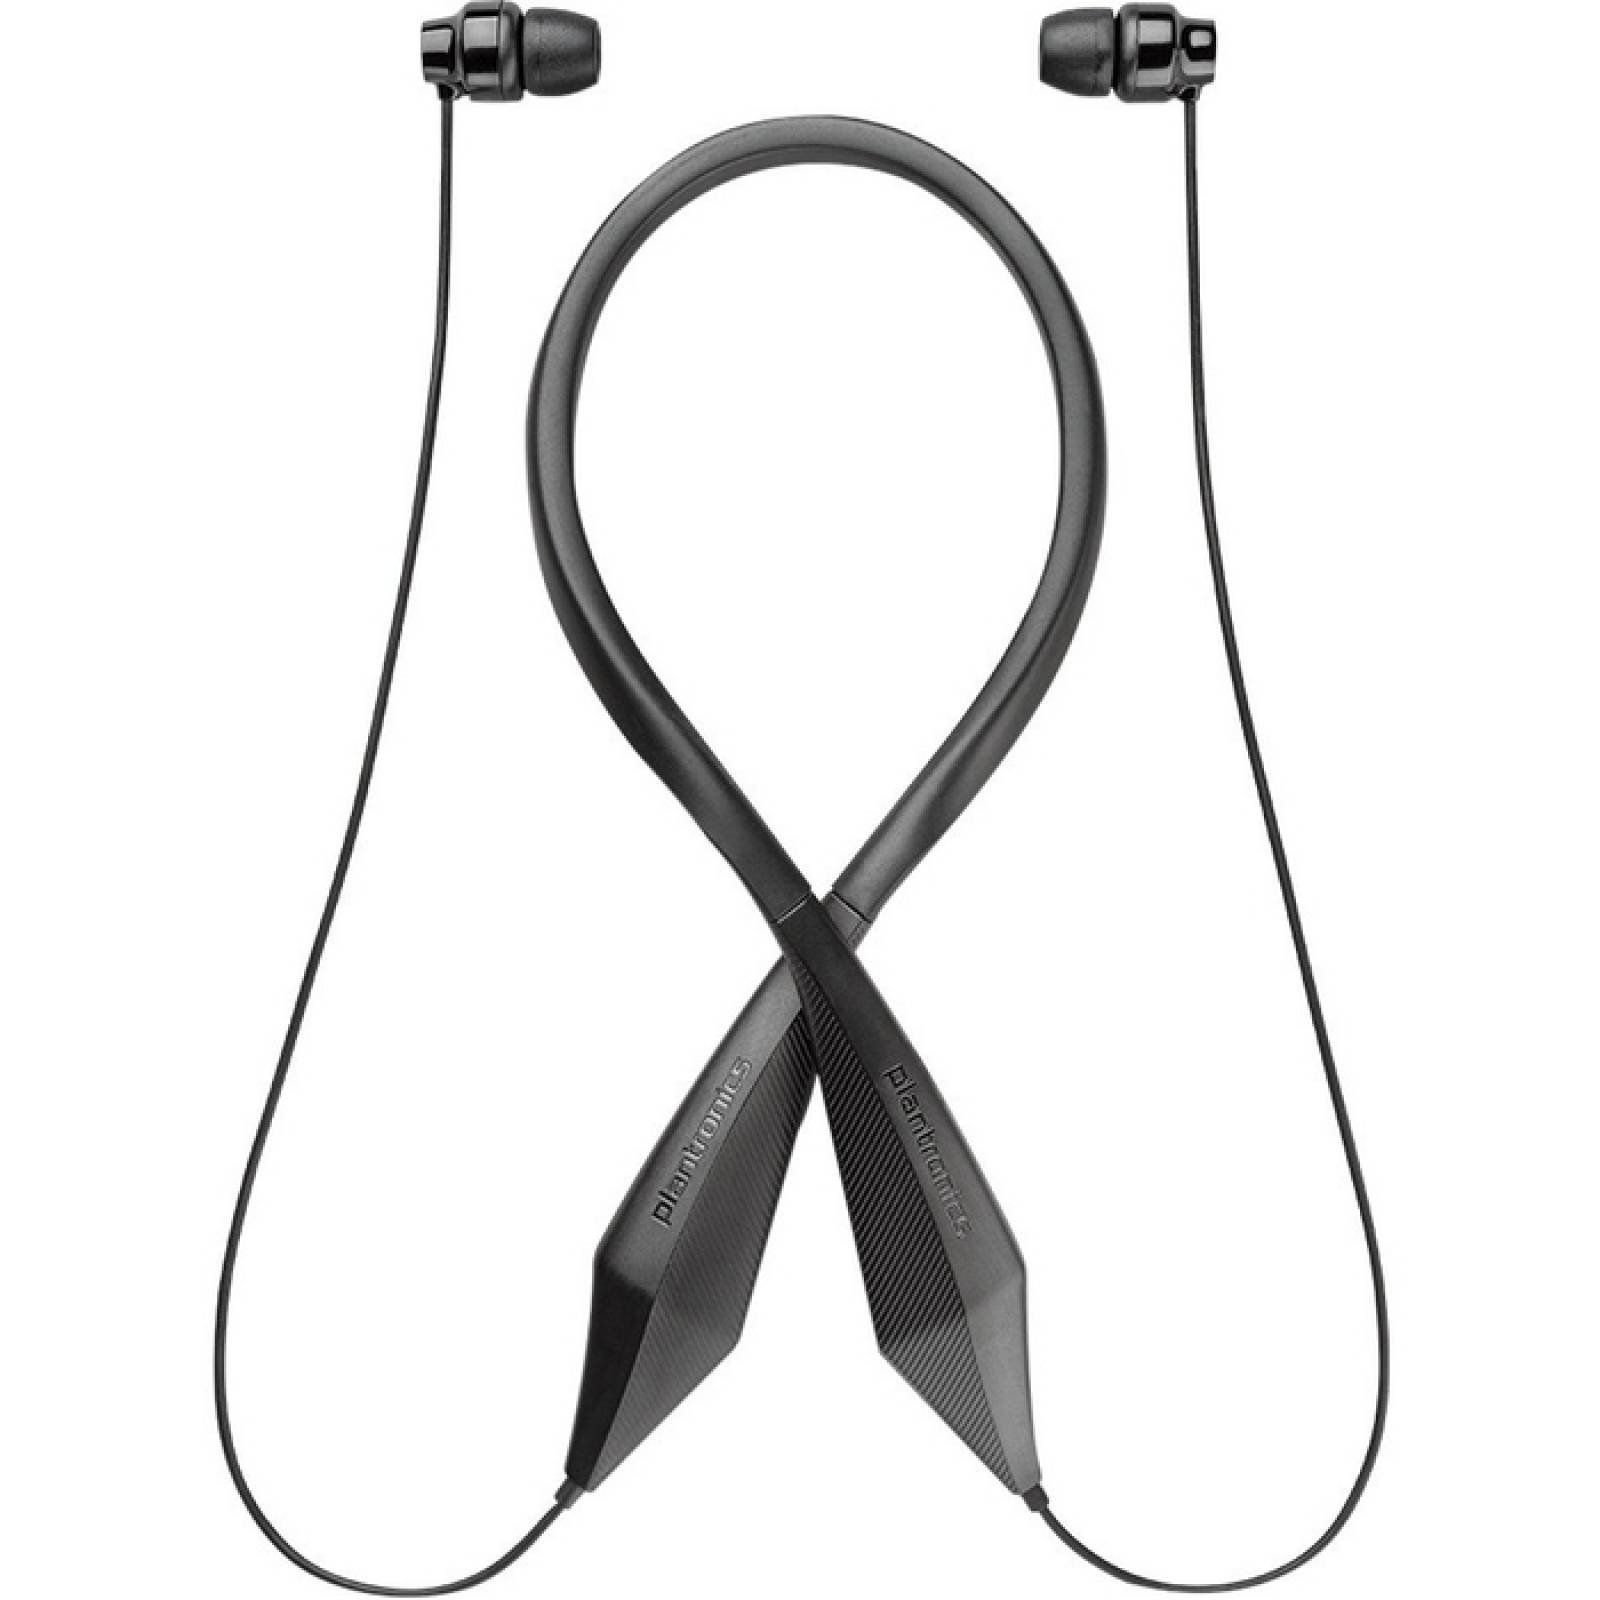 Auriculares inalmbricos de la serie BackBeat 100 de Plantronics